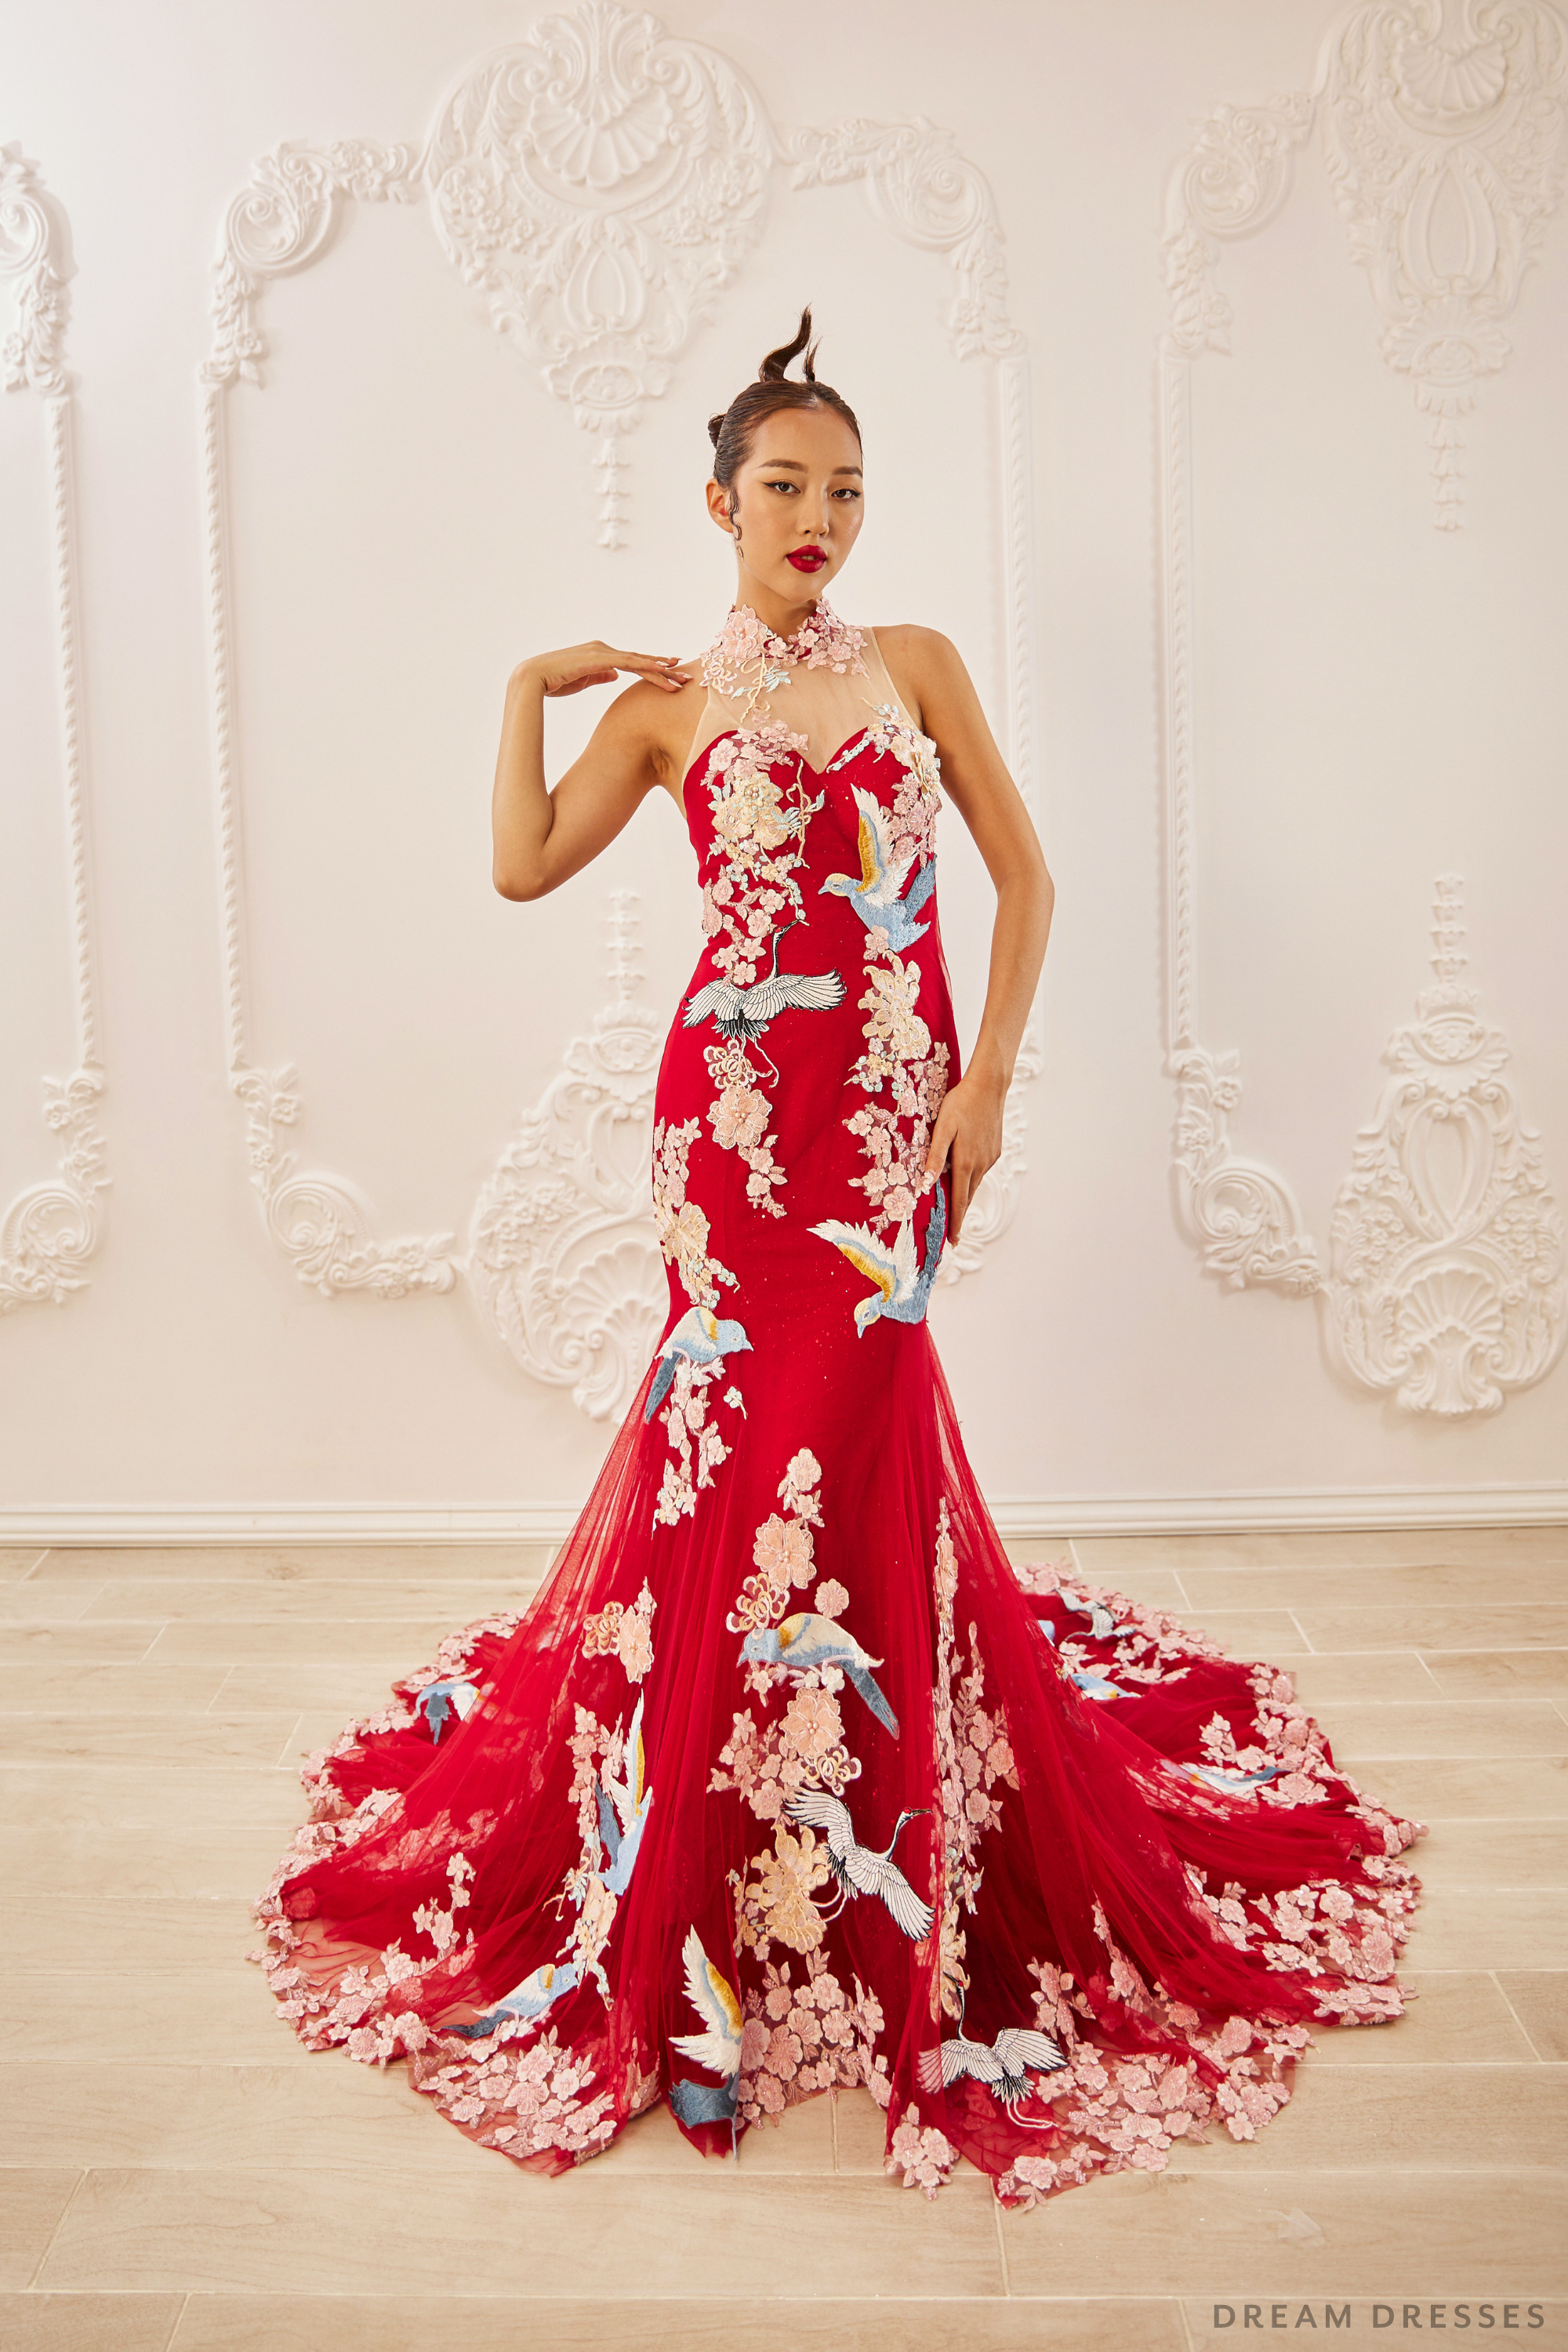 Dress: Paola by Eva Lendel — Kinsley James Couture Bridal